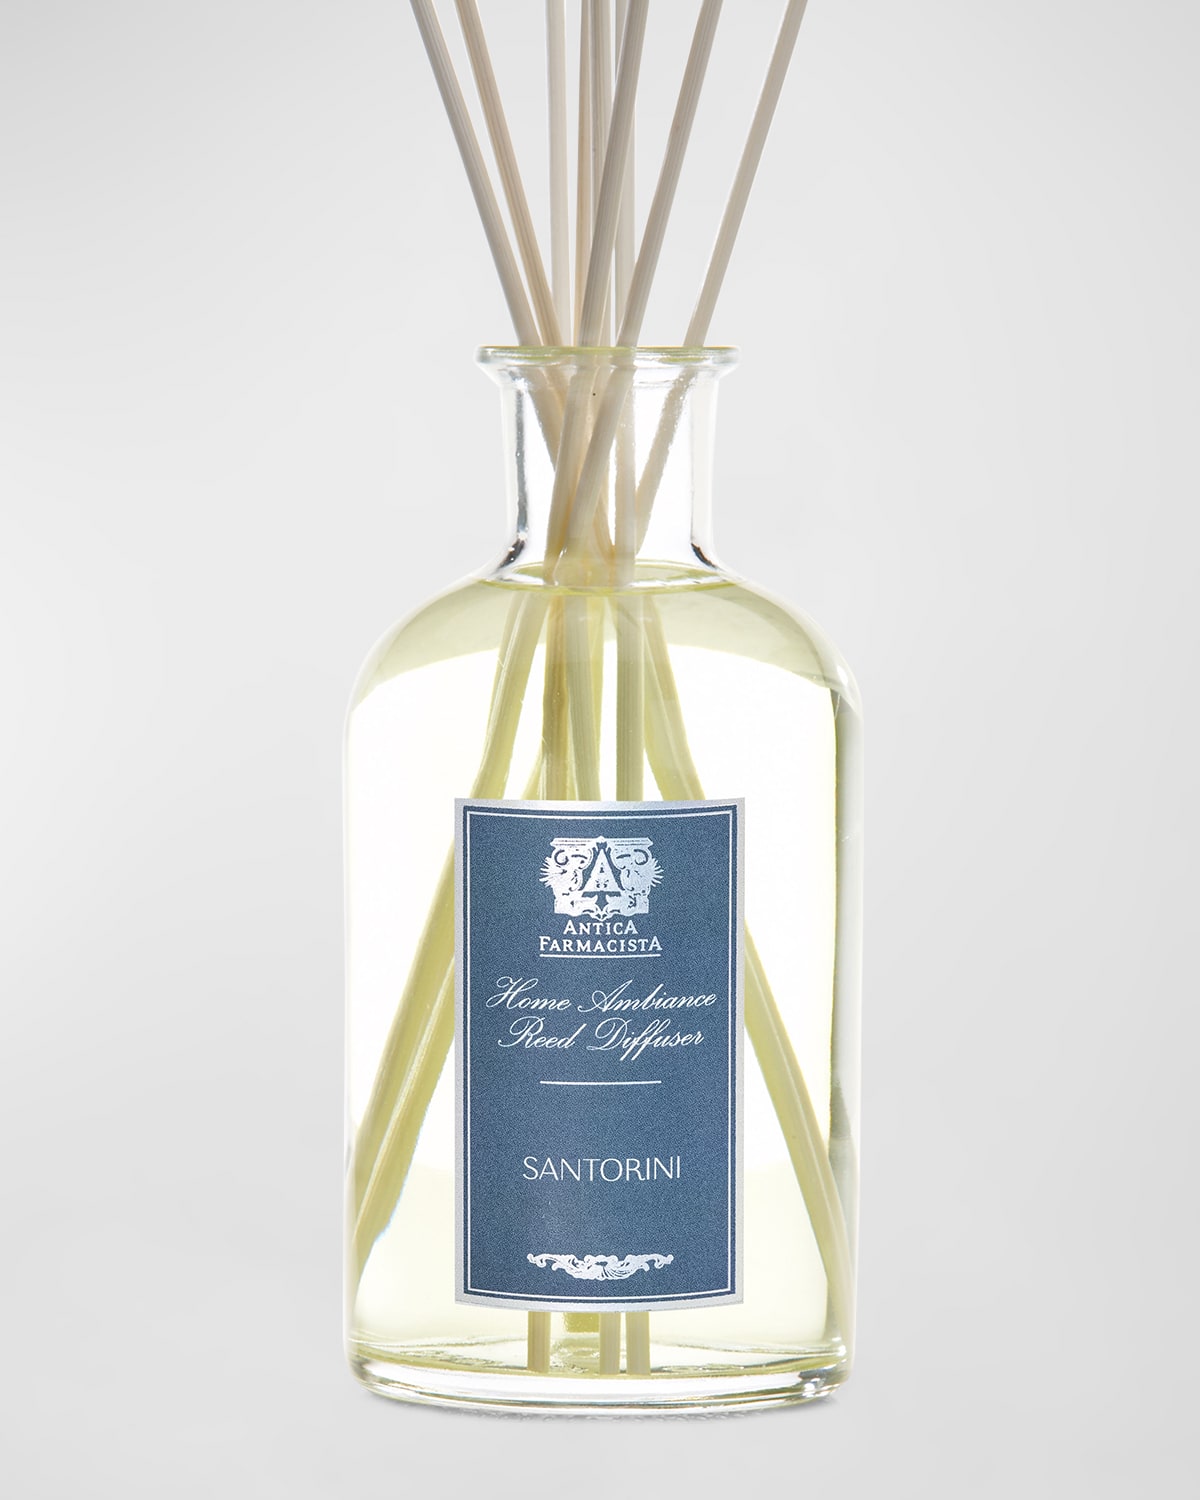 Santorini Home Ambiance Fragrance, 17.0 oz.